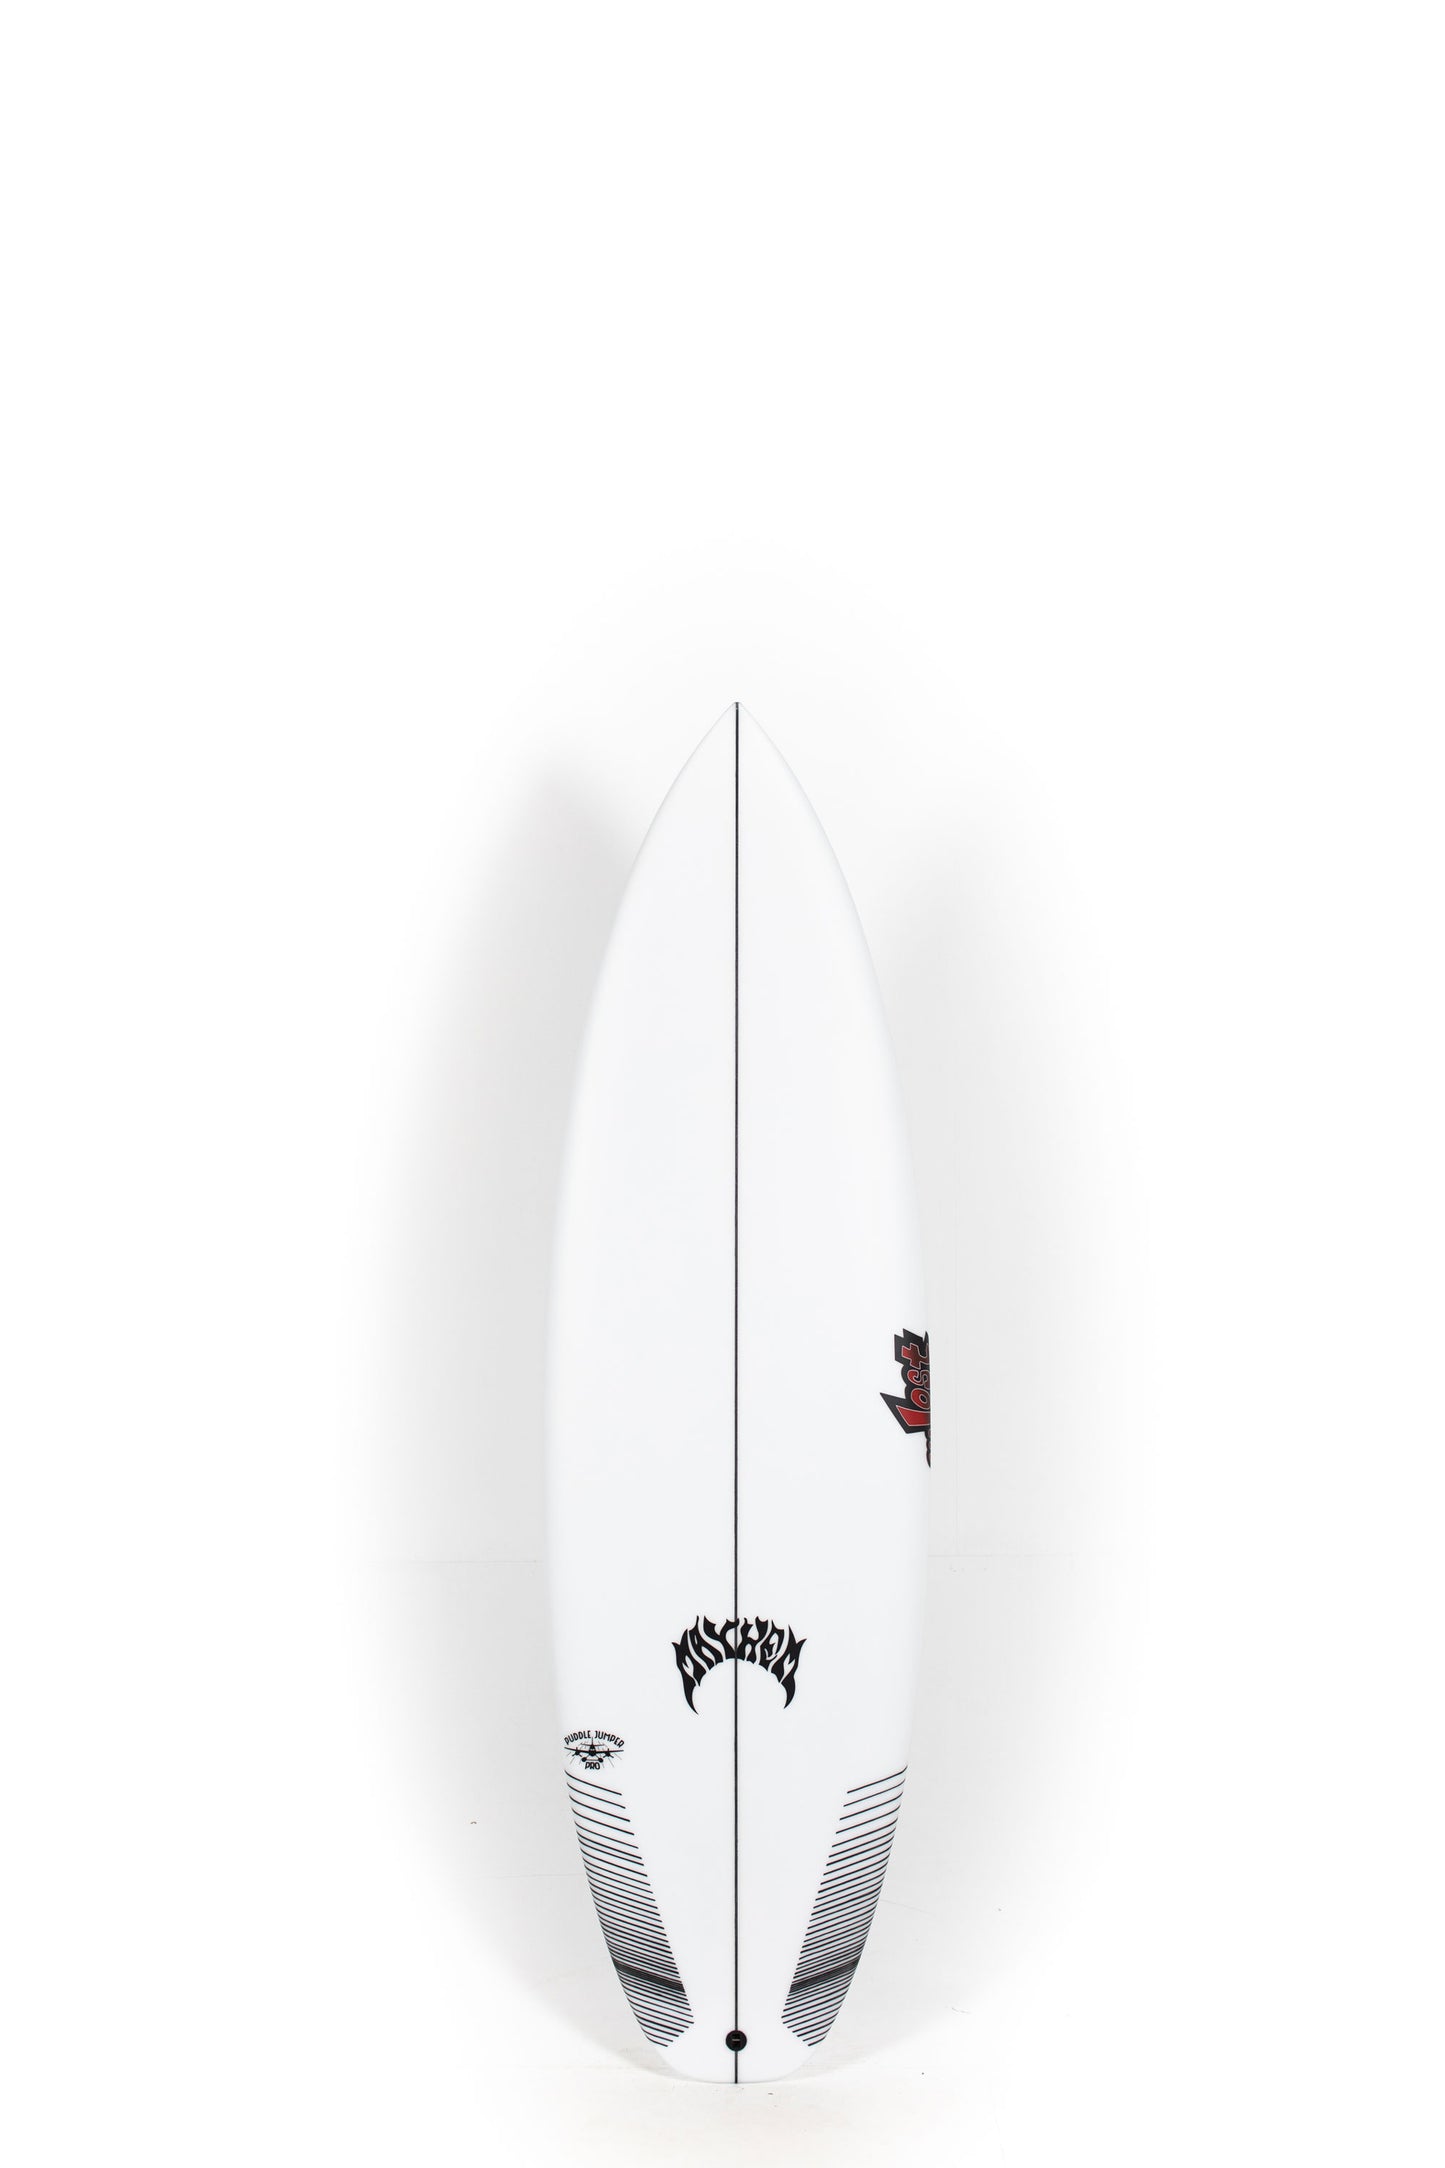 Pukas Surf Shop - Lost Surfboard - PUDDLE JUMPER-PRO by Matt Biolos - 5'10" x 20 x 2.5 x 31,5L - MH16656